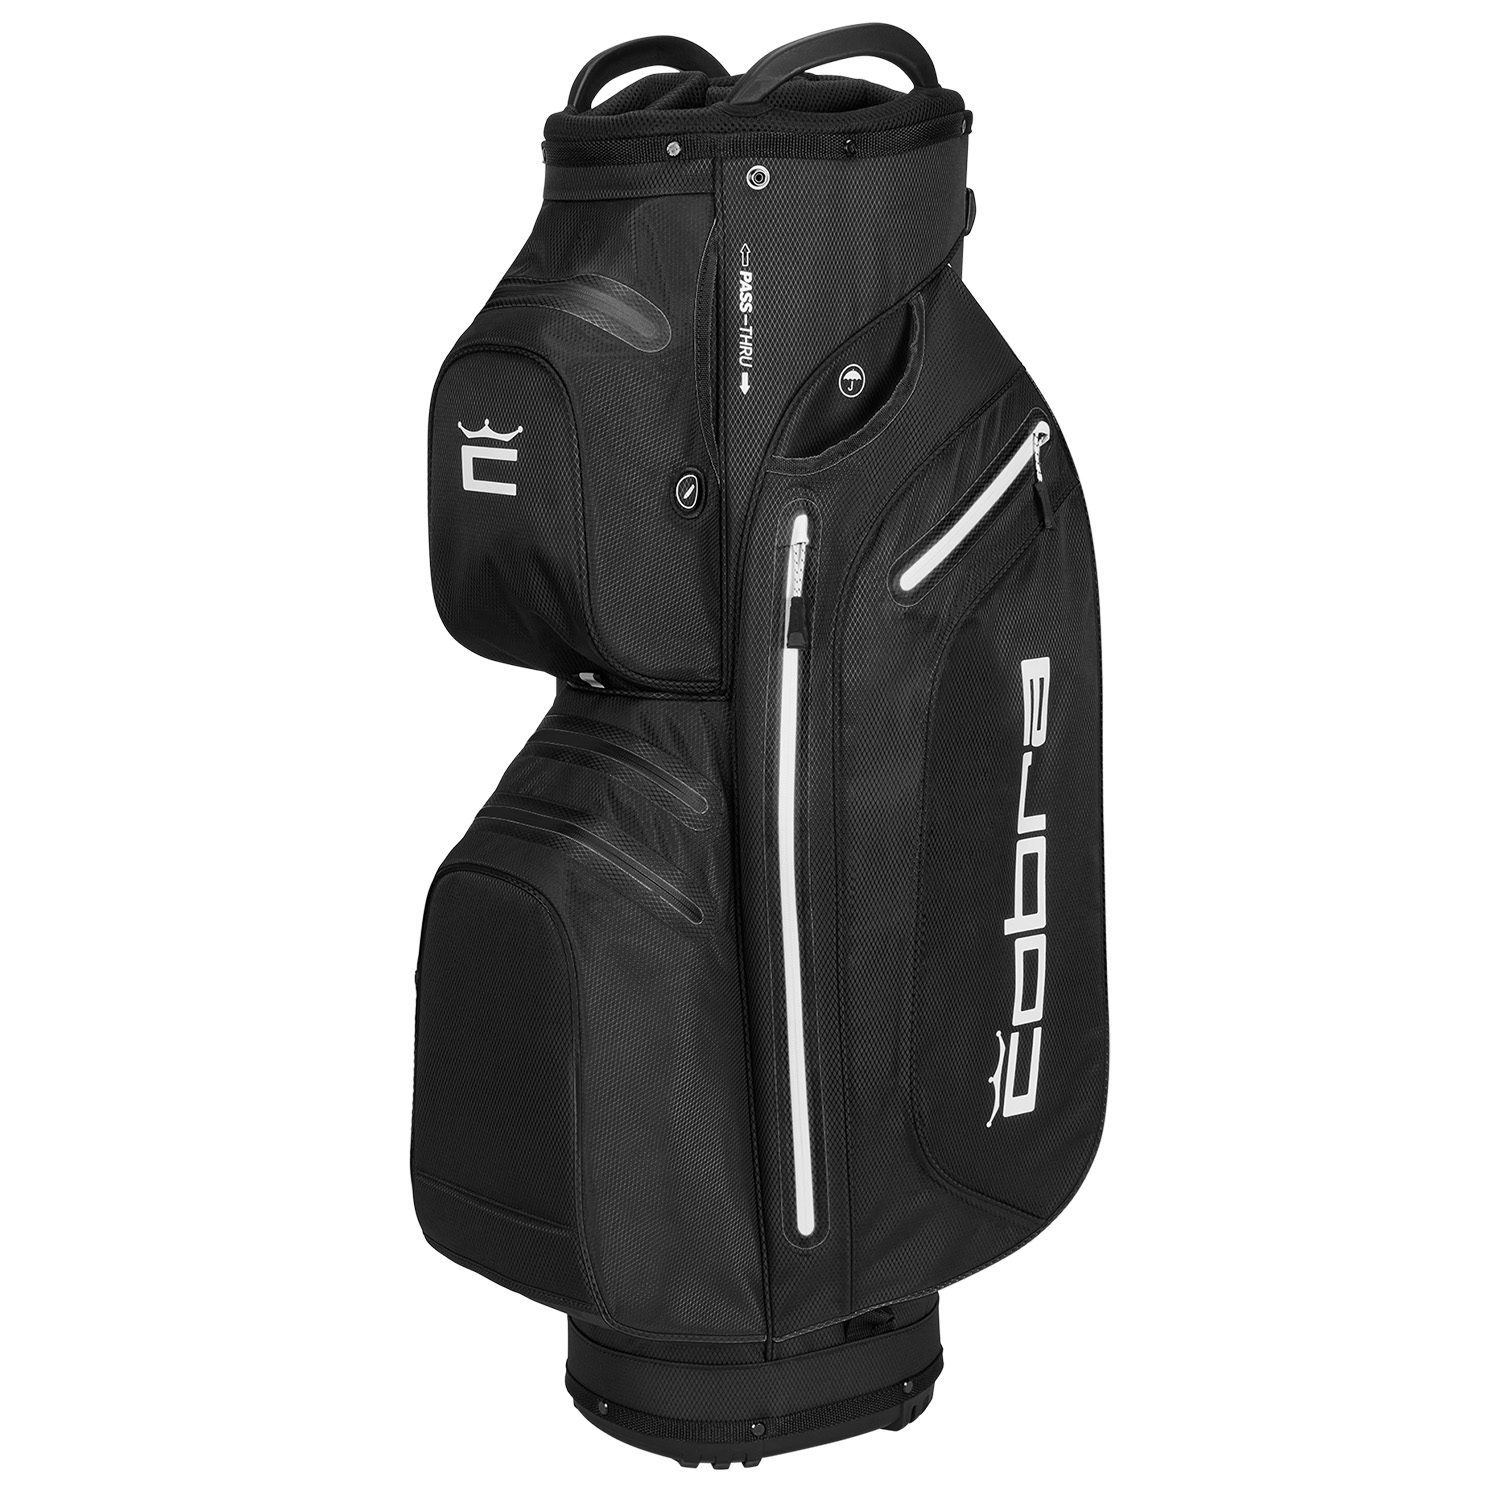 Cobra Ultradry Pro Waterproof Golf Cart Bag